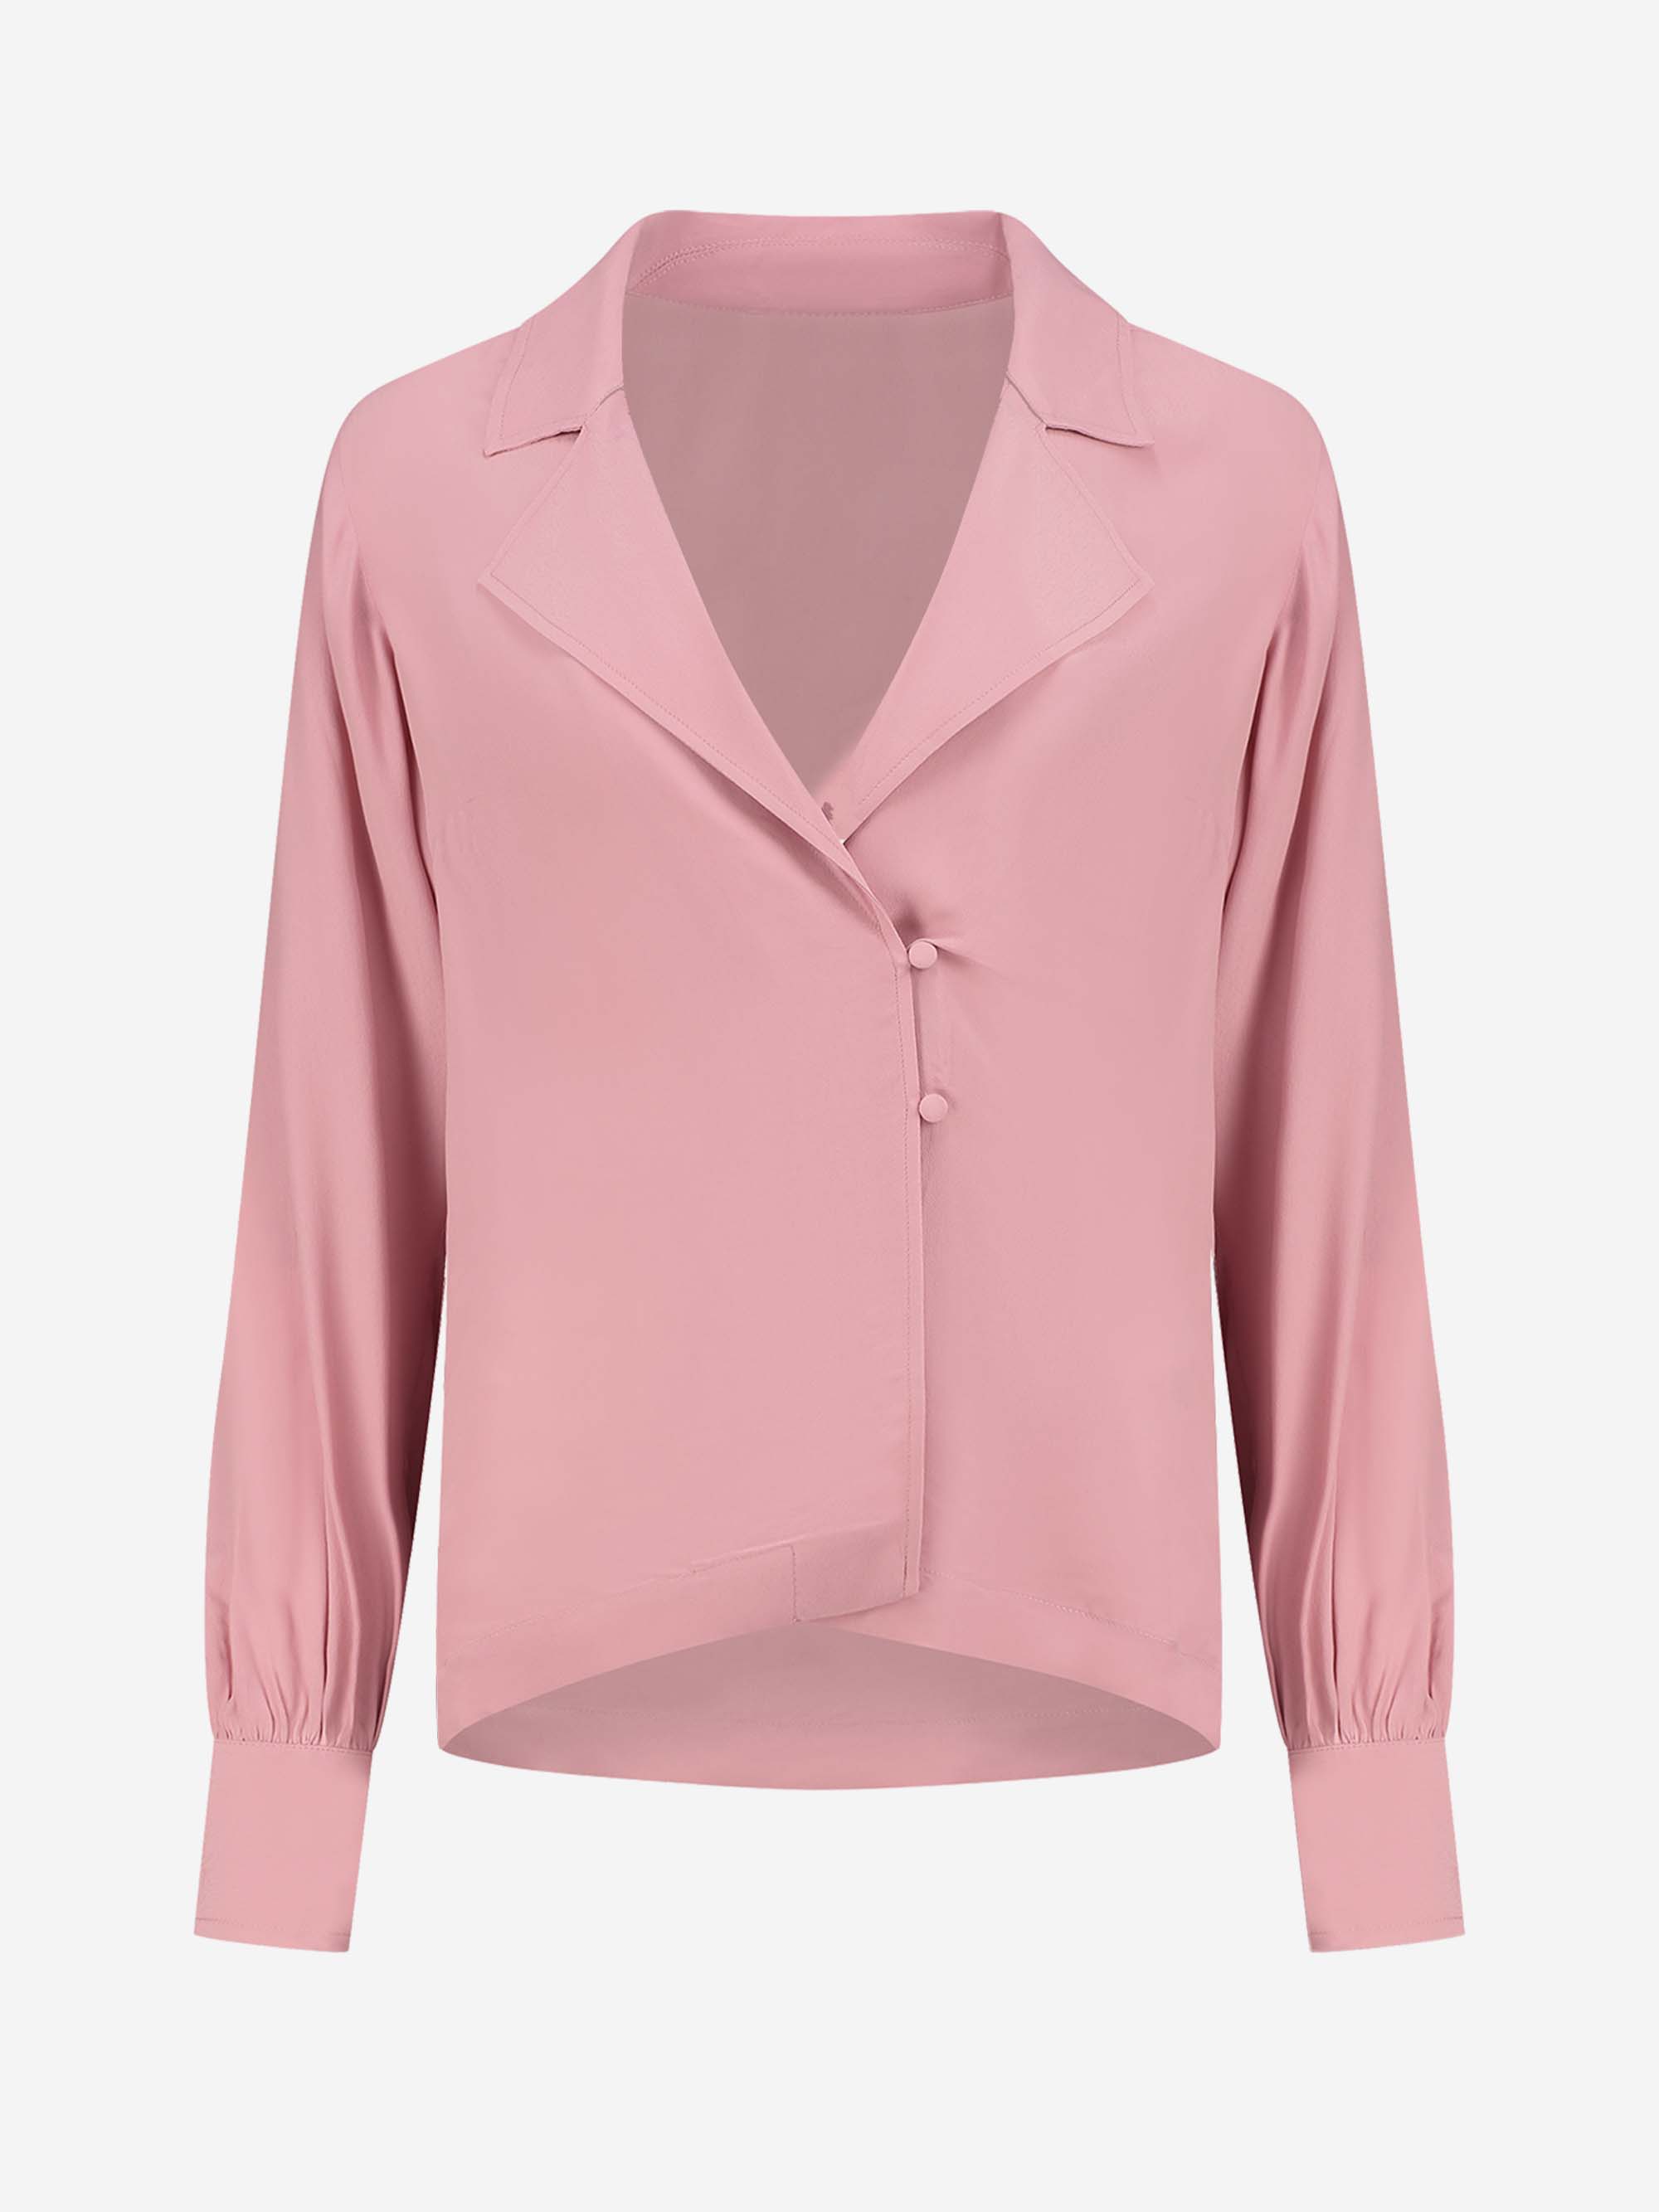 Regular blouse with asymmetric lapel collar 